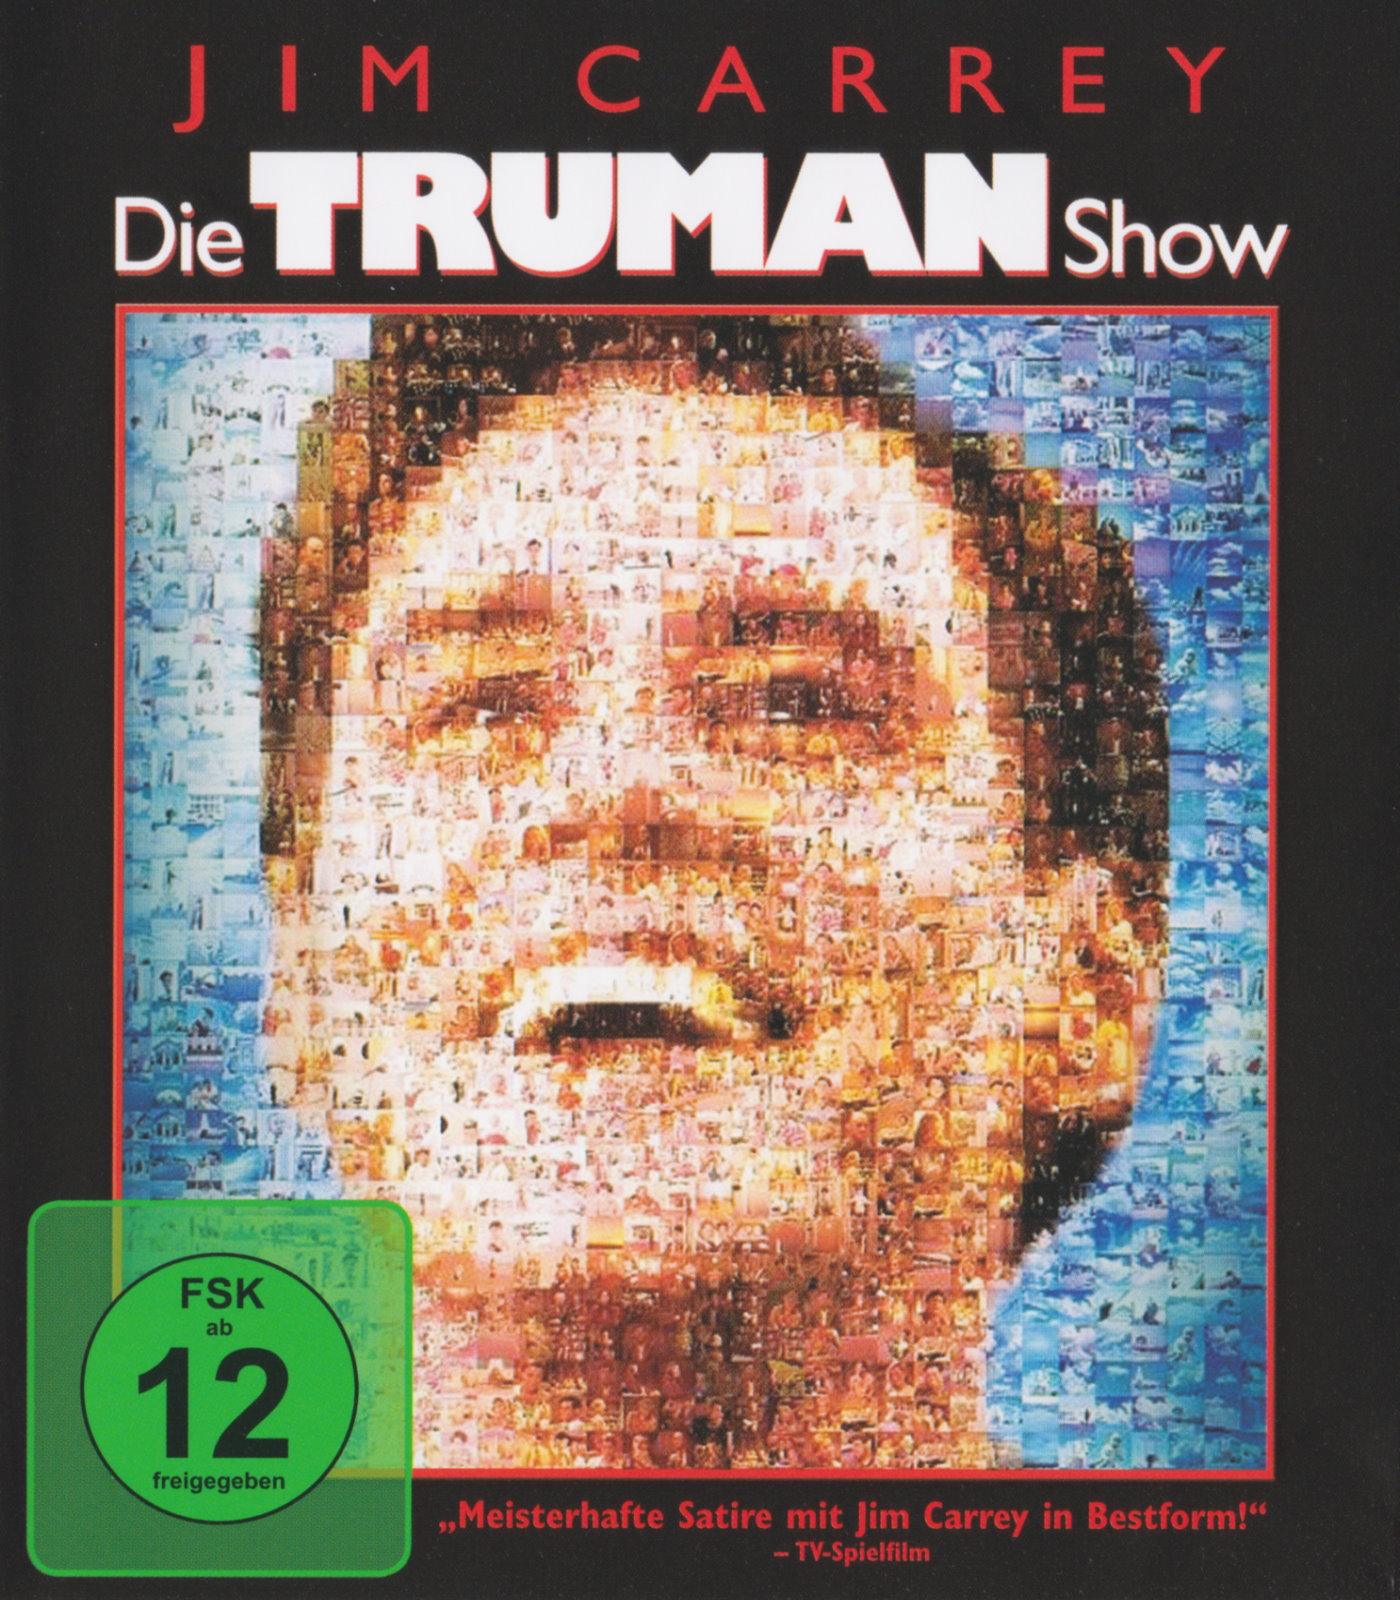 Cover - Die Truman Show.jpg